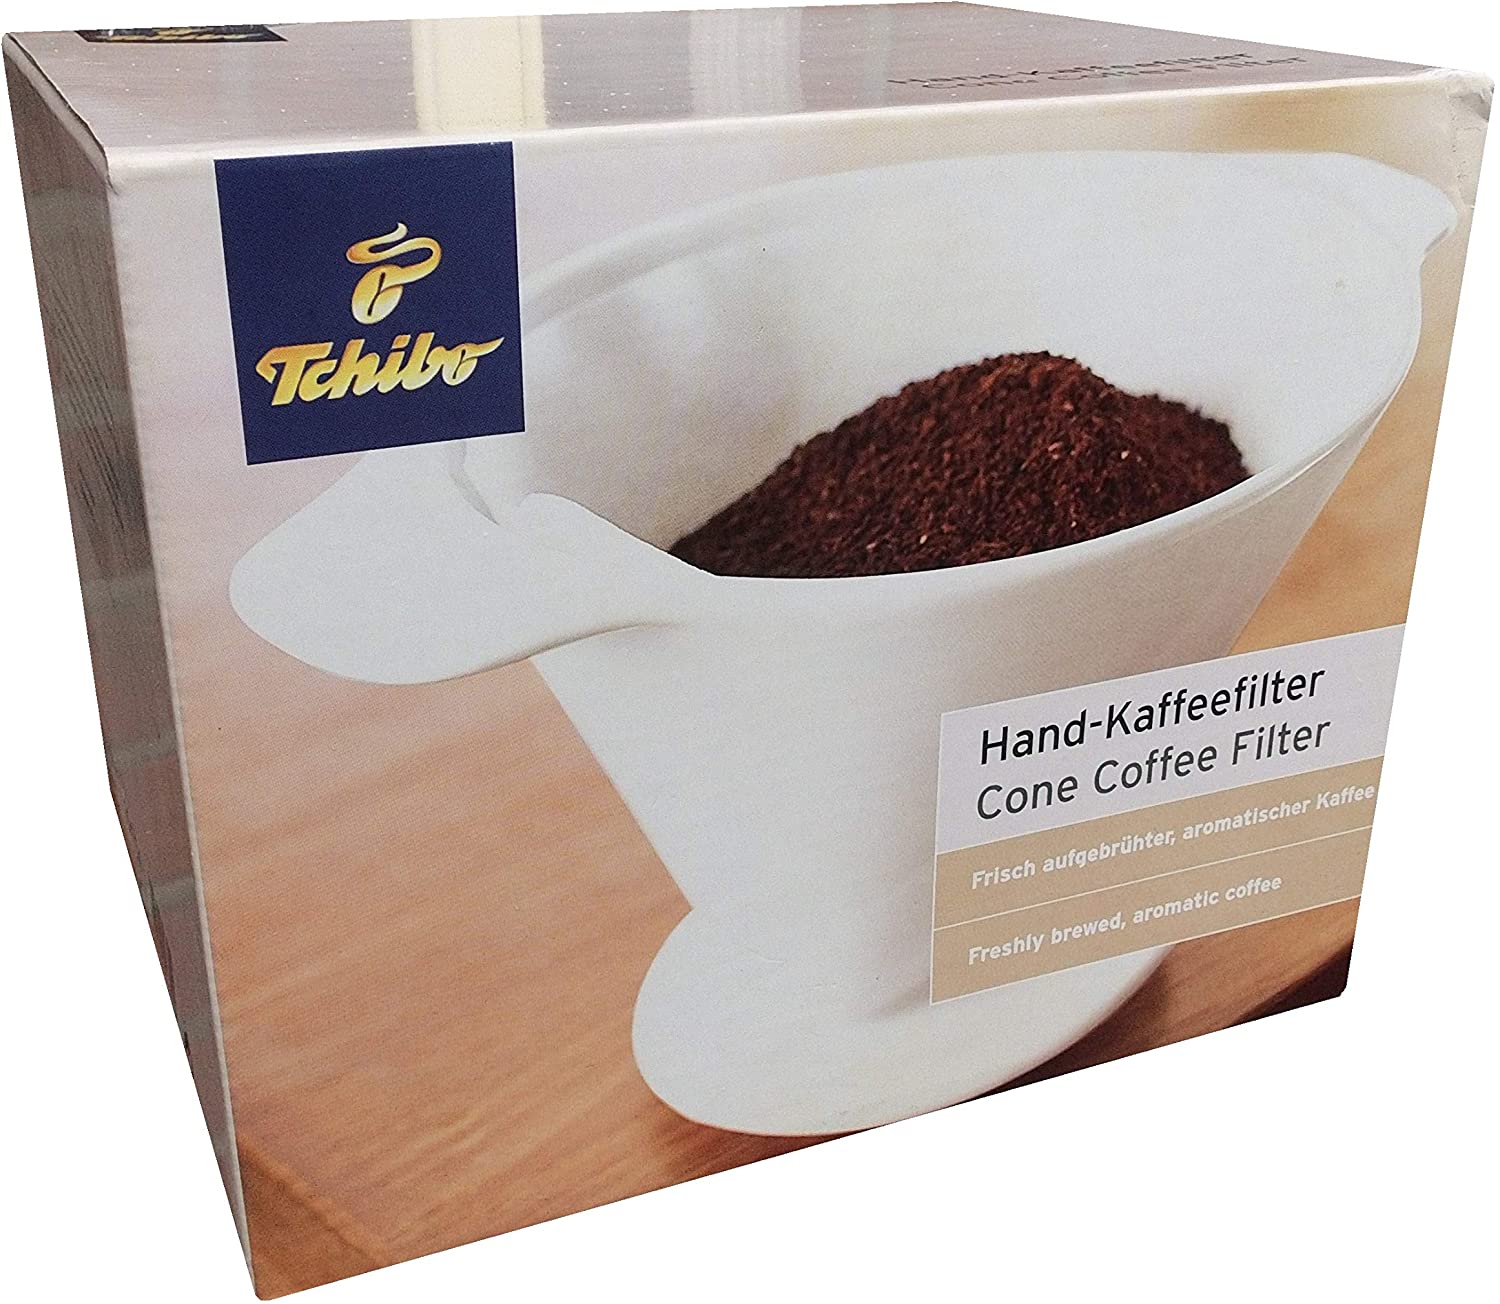 Tchibo Ceramic Hand Coffee Filter 1x4 Coffee Filter Coffee Filter Hand Filter